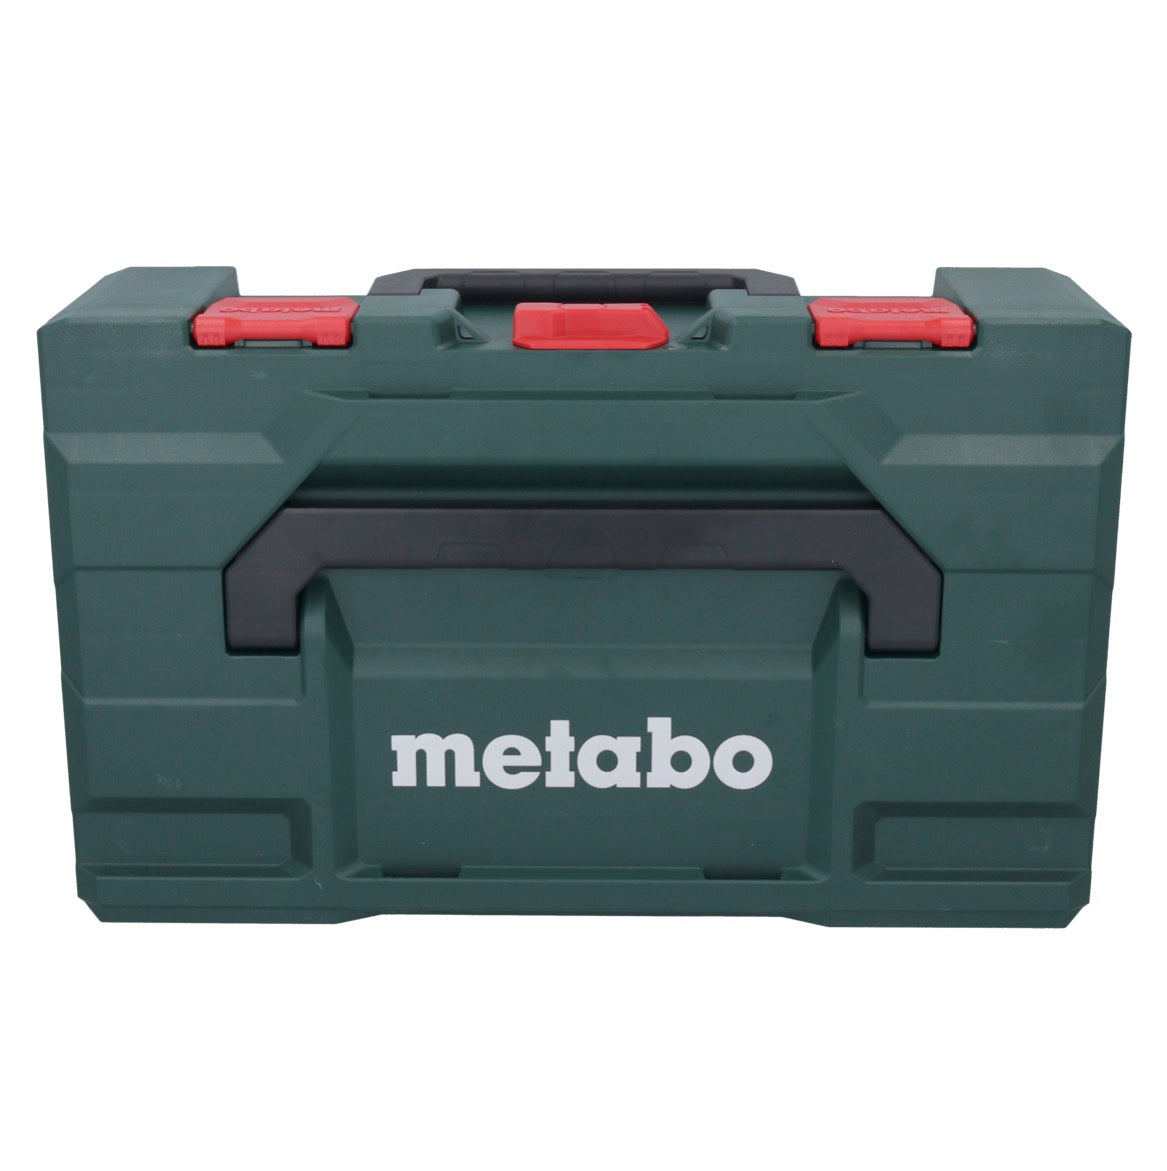 Metabo WPB 18 LT BL 11-125 Quick Akku Winkelschleifer 18 V 125 mm Brushless + 2x Akku 10,0 Ah + Ladegerät + metaBOX - Toolbrothers